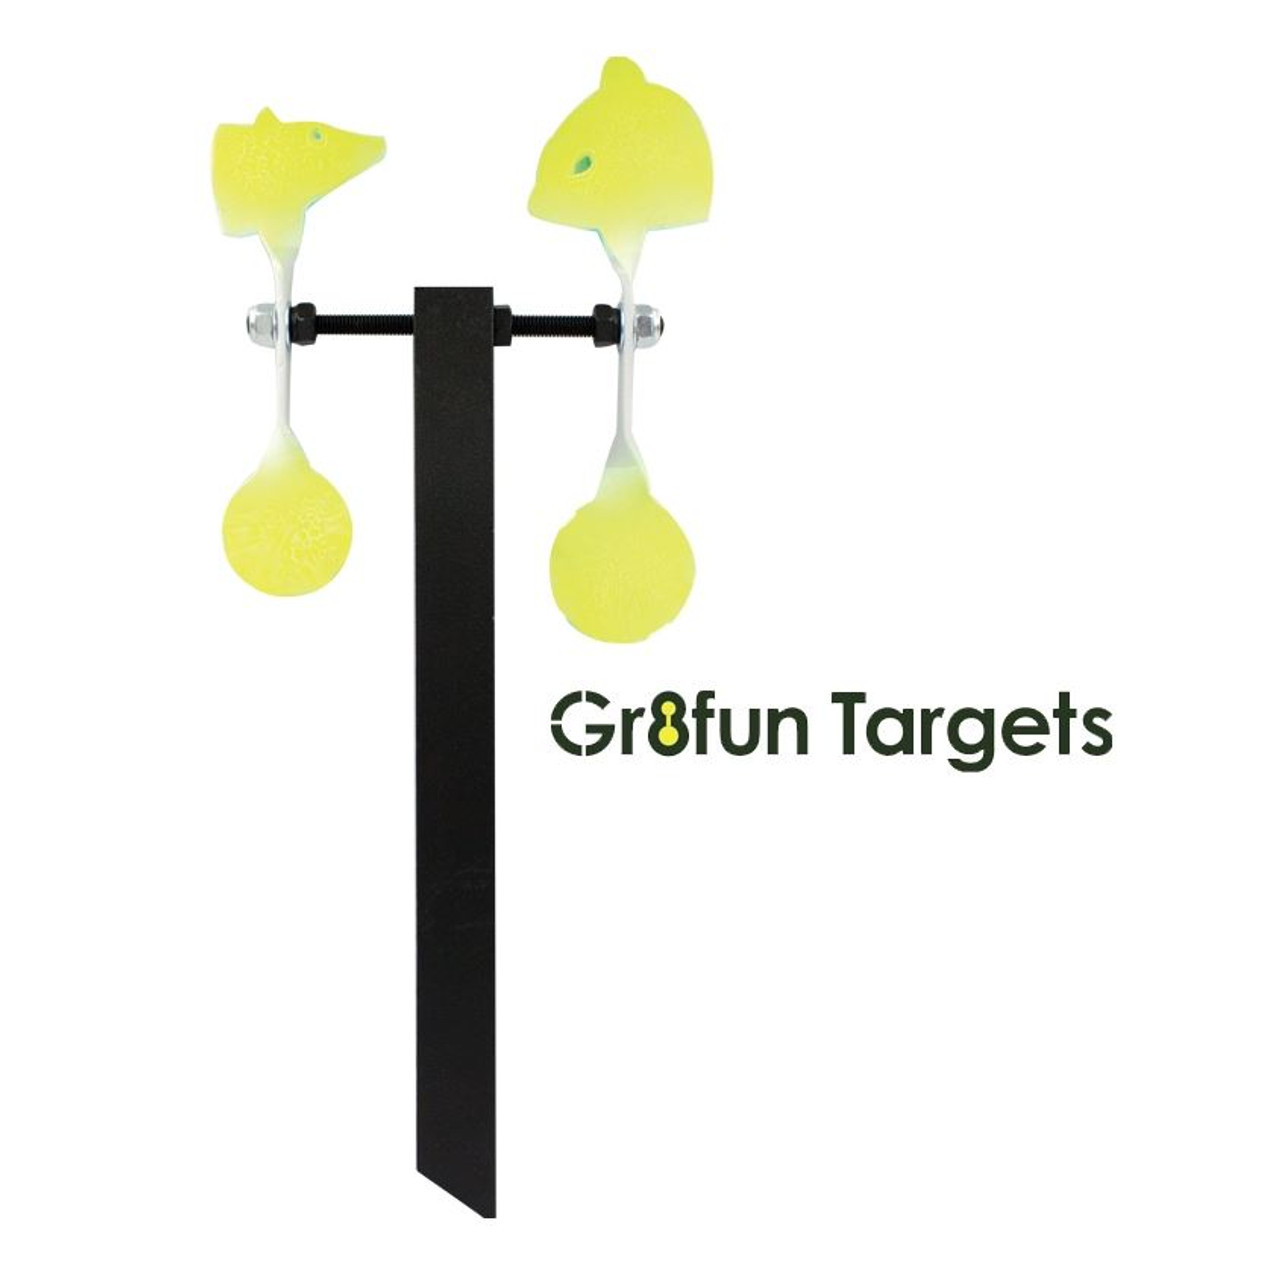 Mammal Head Spinning Target Set Metal for Airguns by Gr8fun